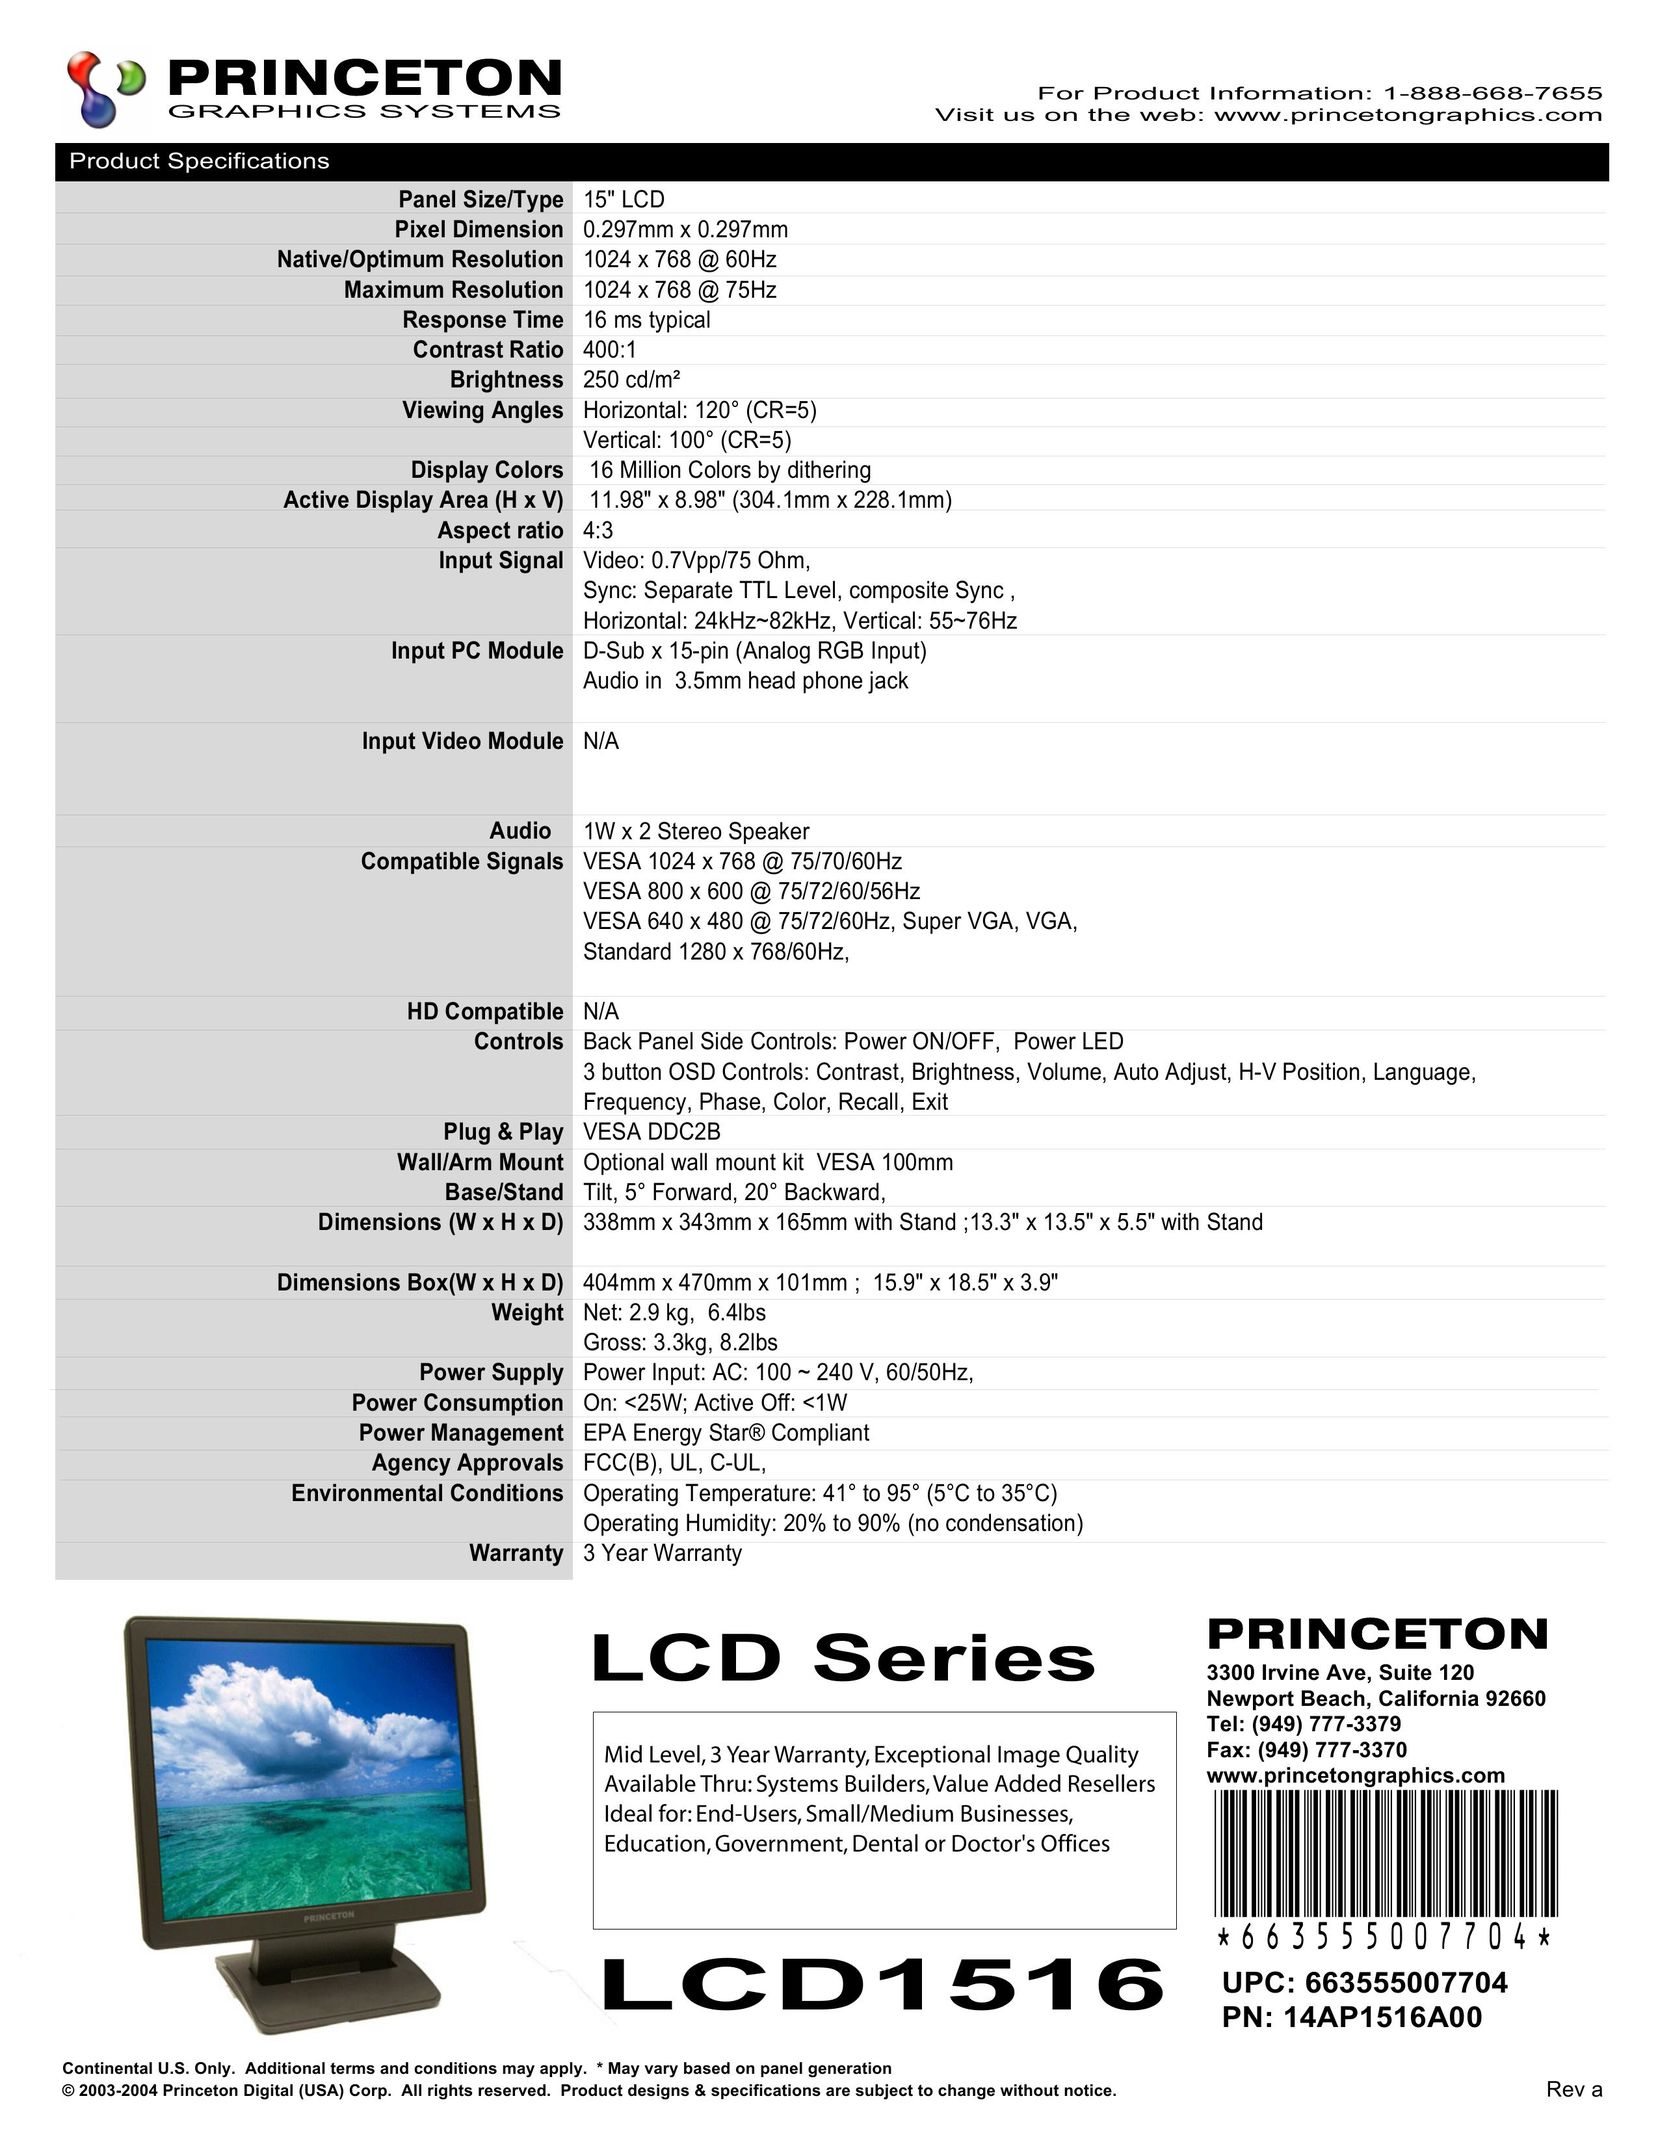 Princeton LCD1516 Computer Monitor User Manual